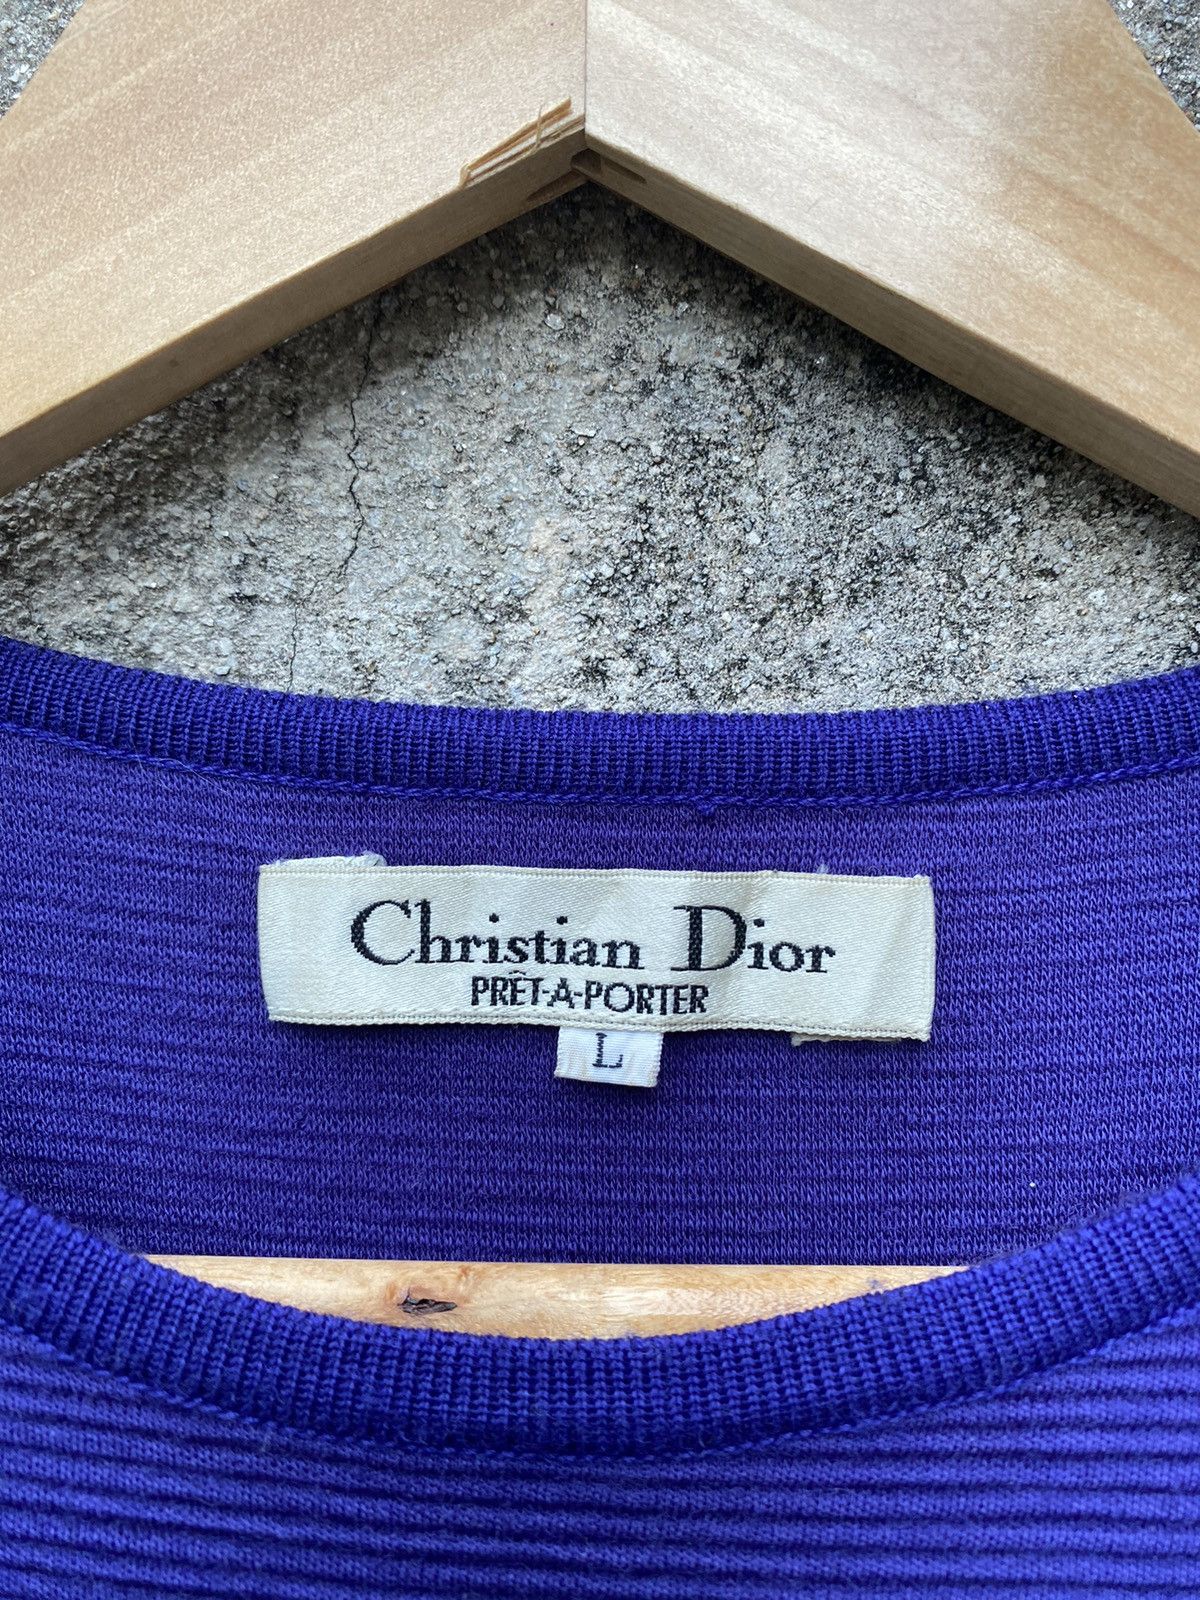 Christian Dior PRET-A-PORTER BLOUSE Fashion Design - 6